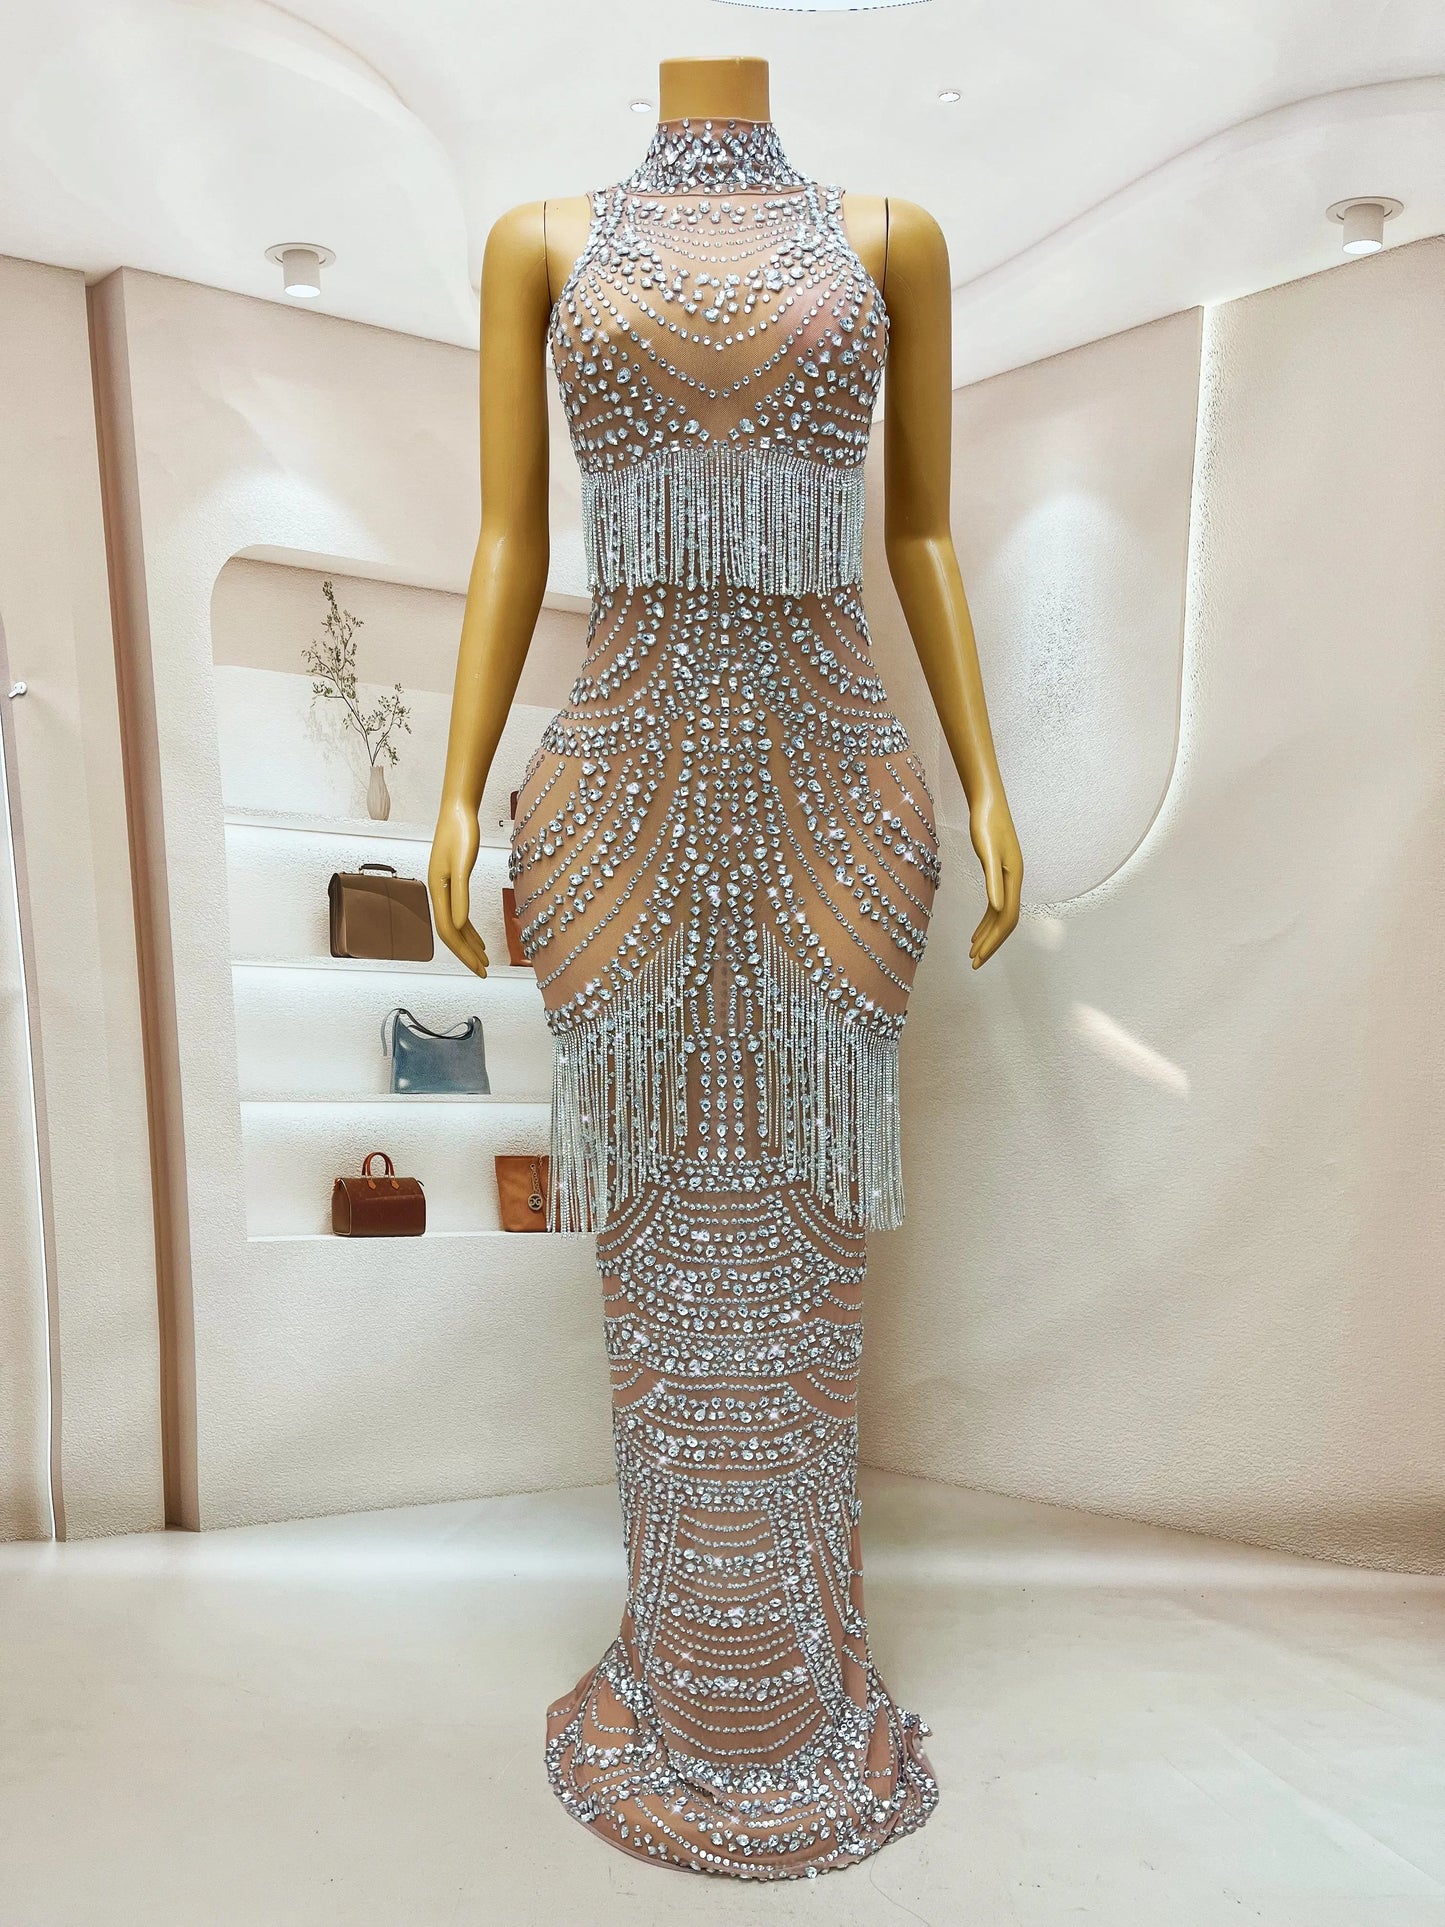 Glitz & Glamour Extravaganza: Bedazzled Crystal Fringe Stretch Dress